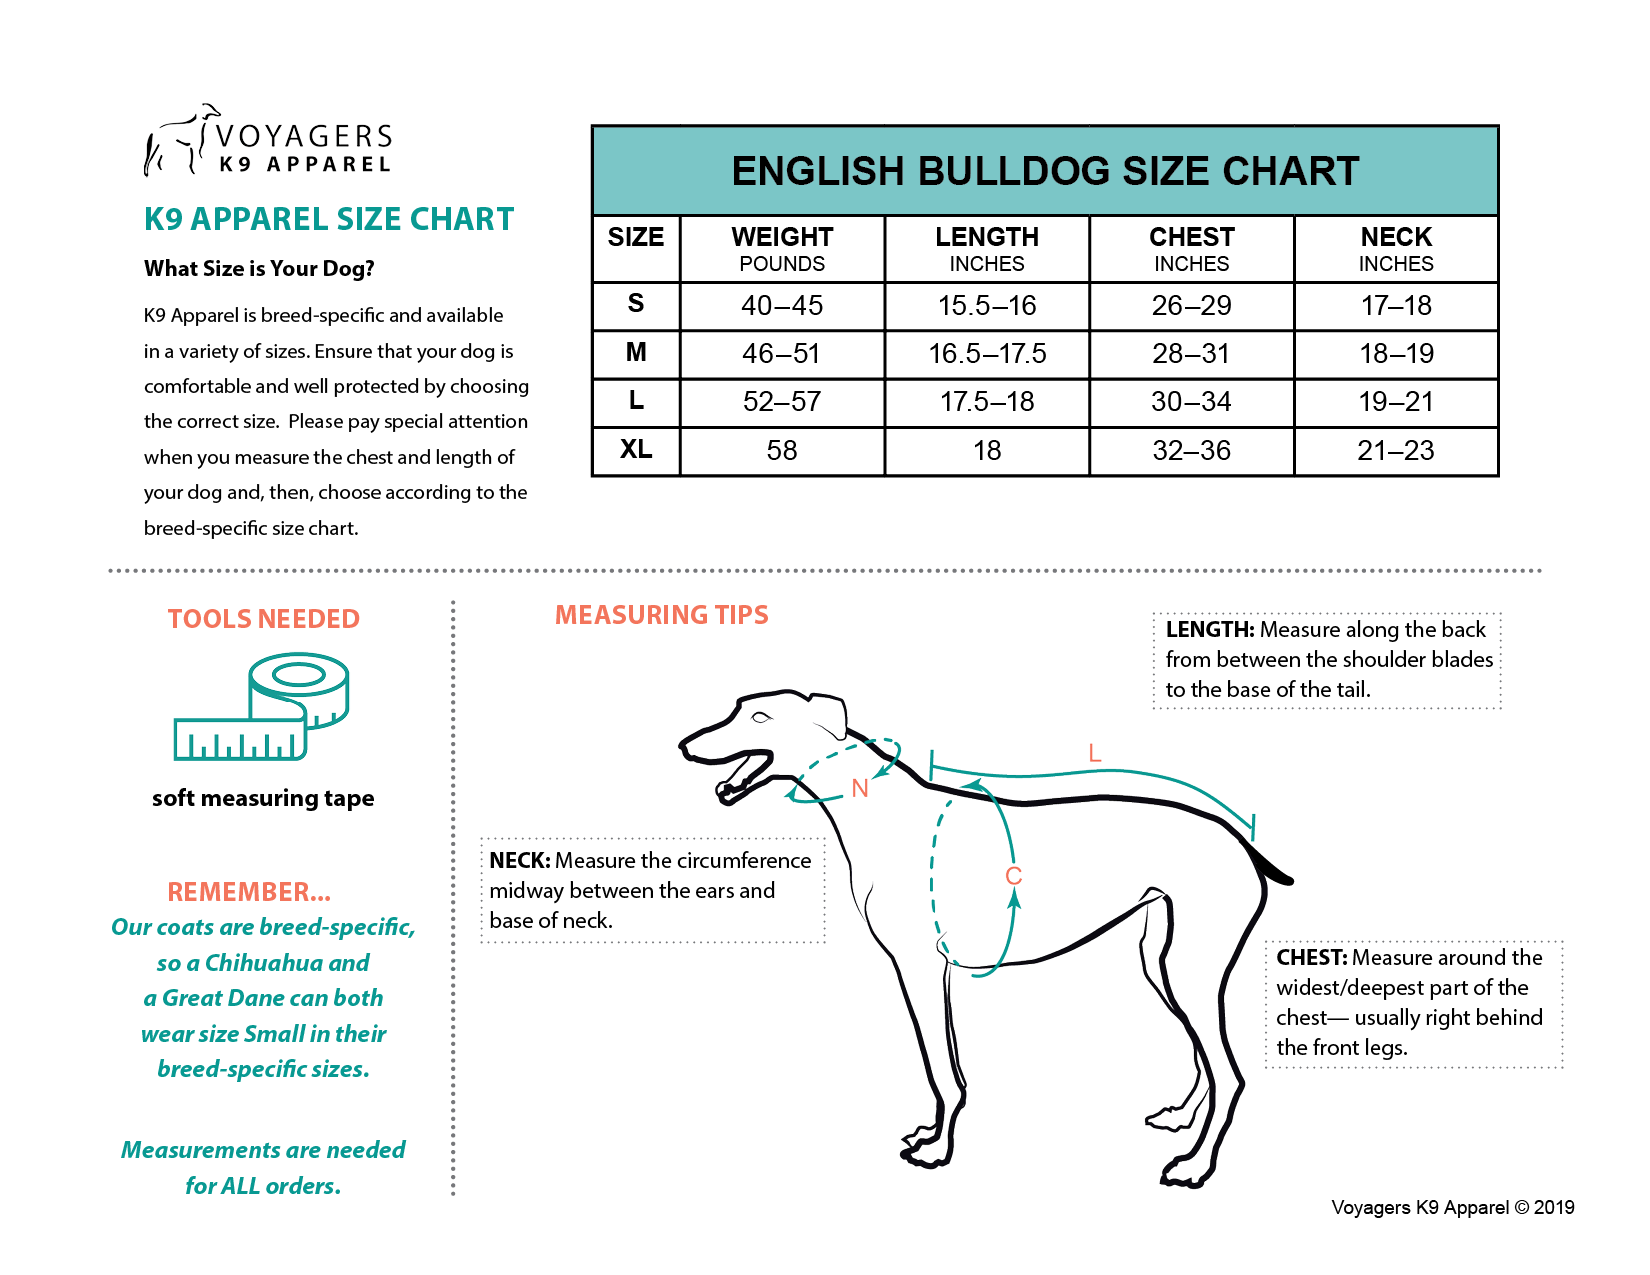 English Bulldog Weight Chart In Pounds